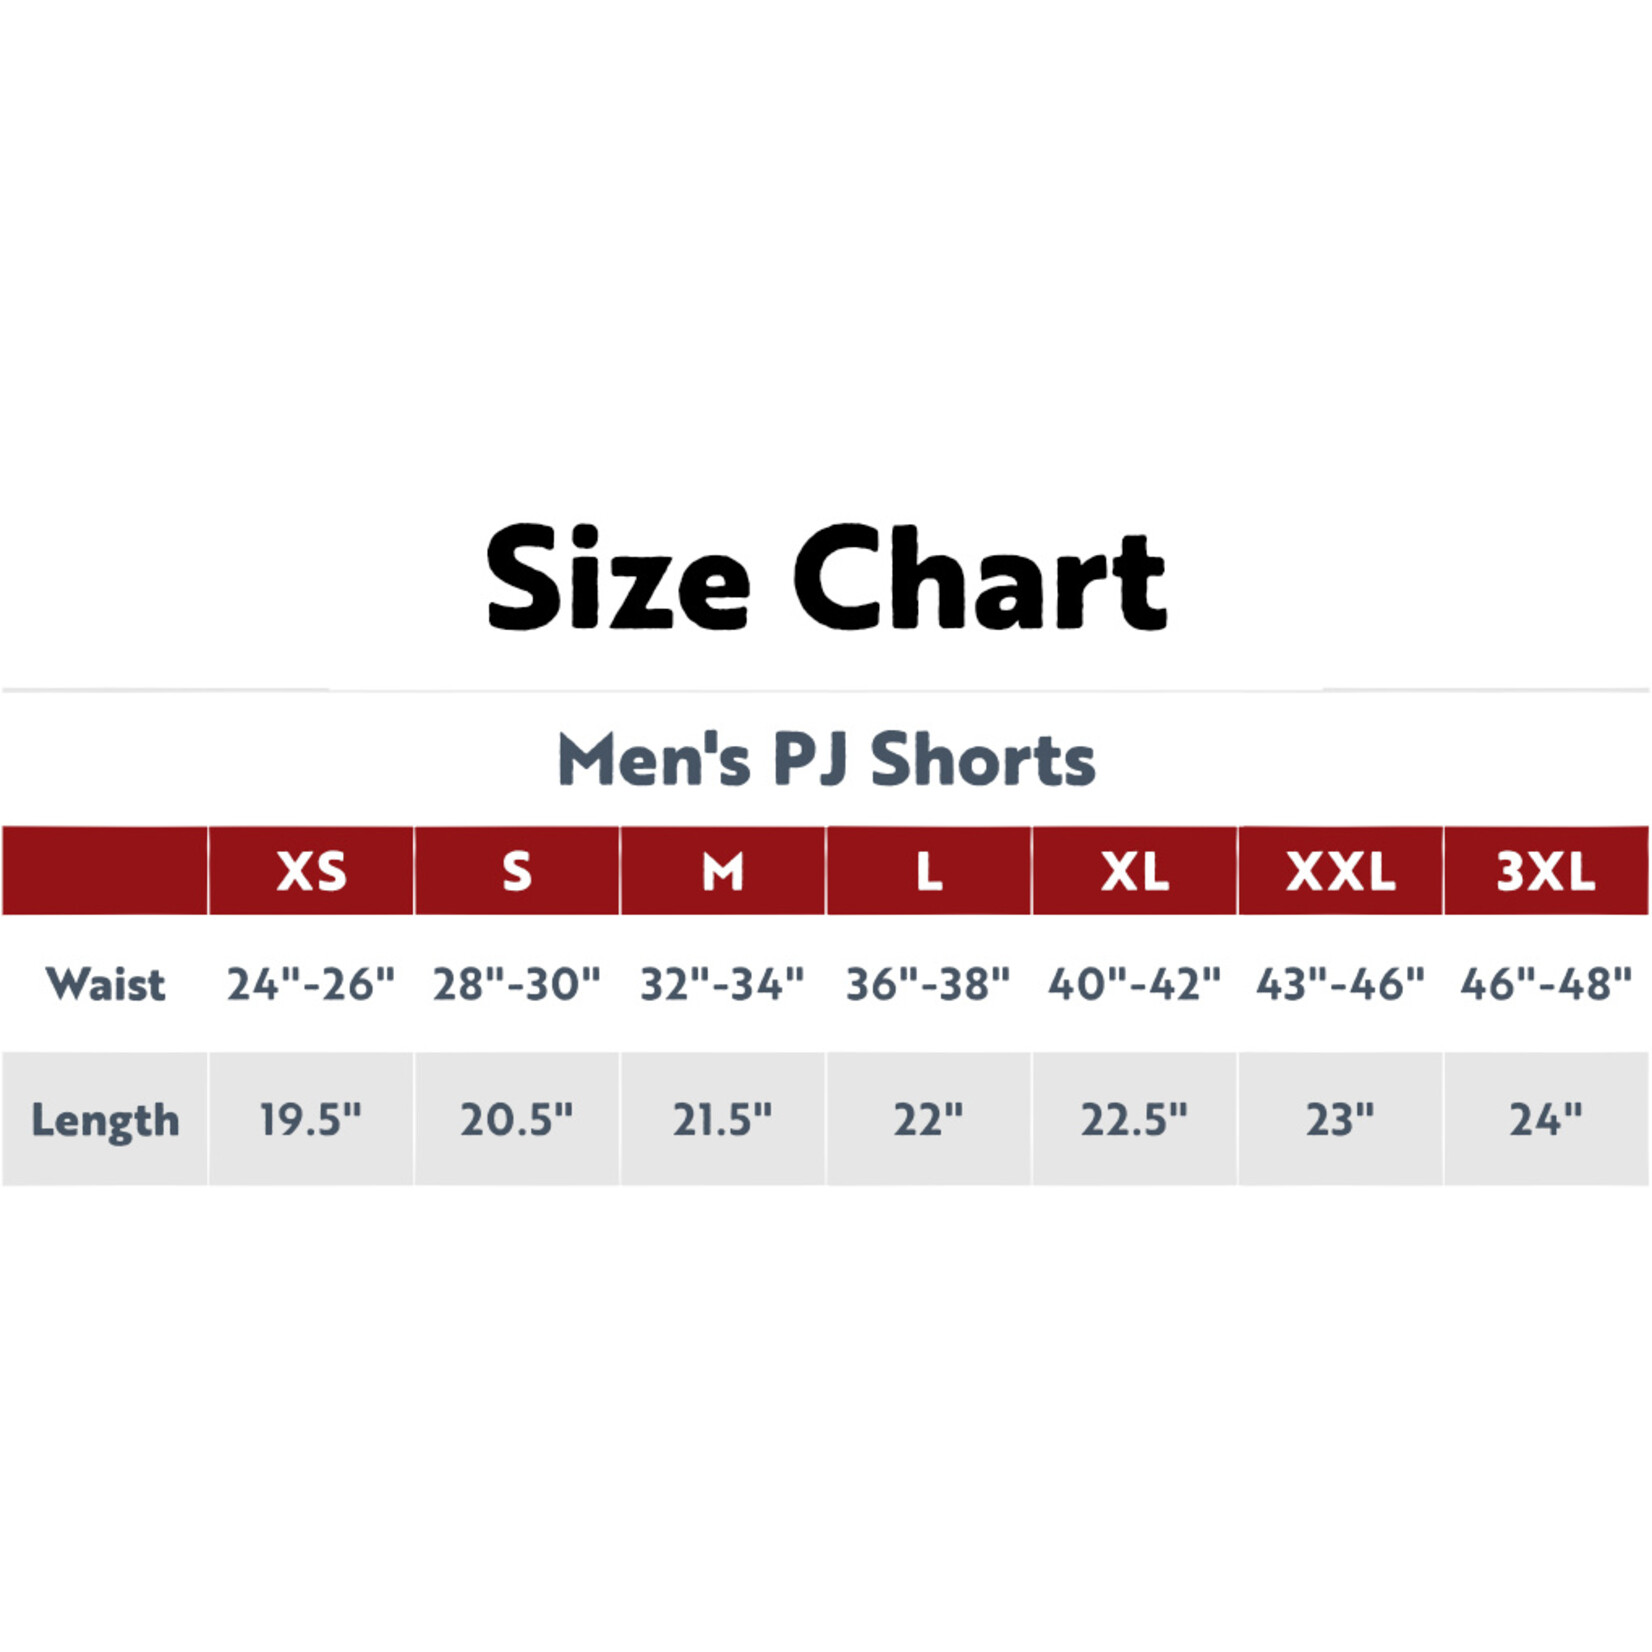 Lazy One Lights Out Men's PJ Shorts